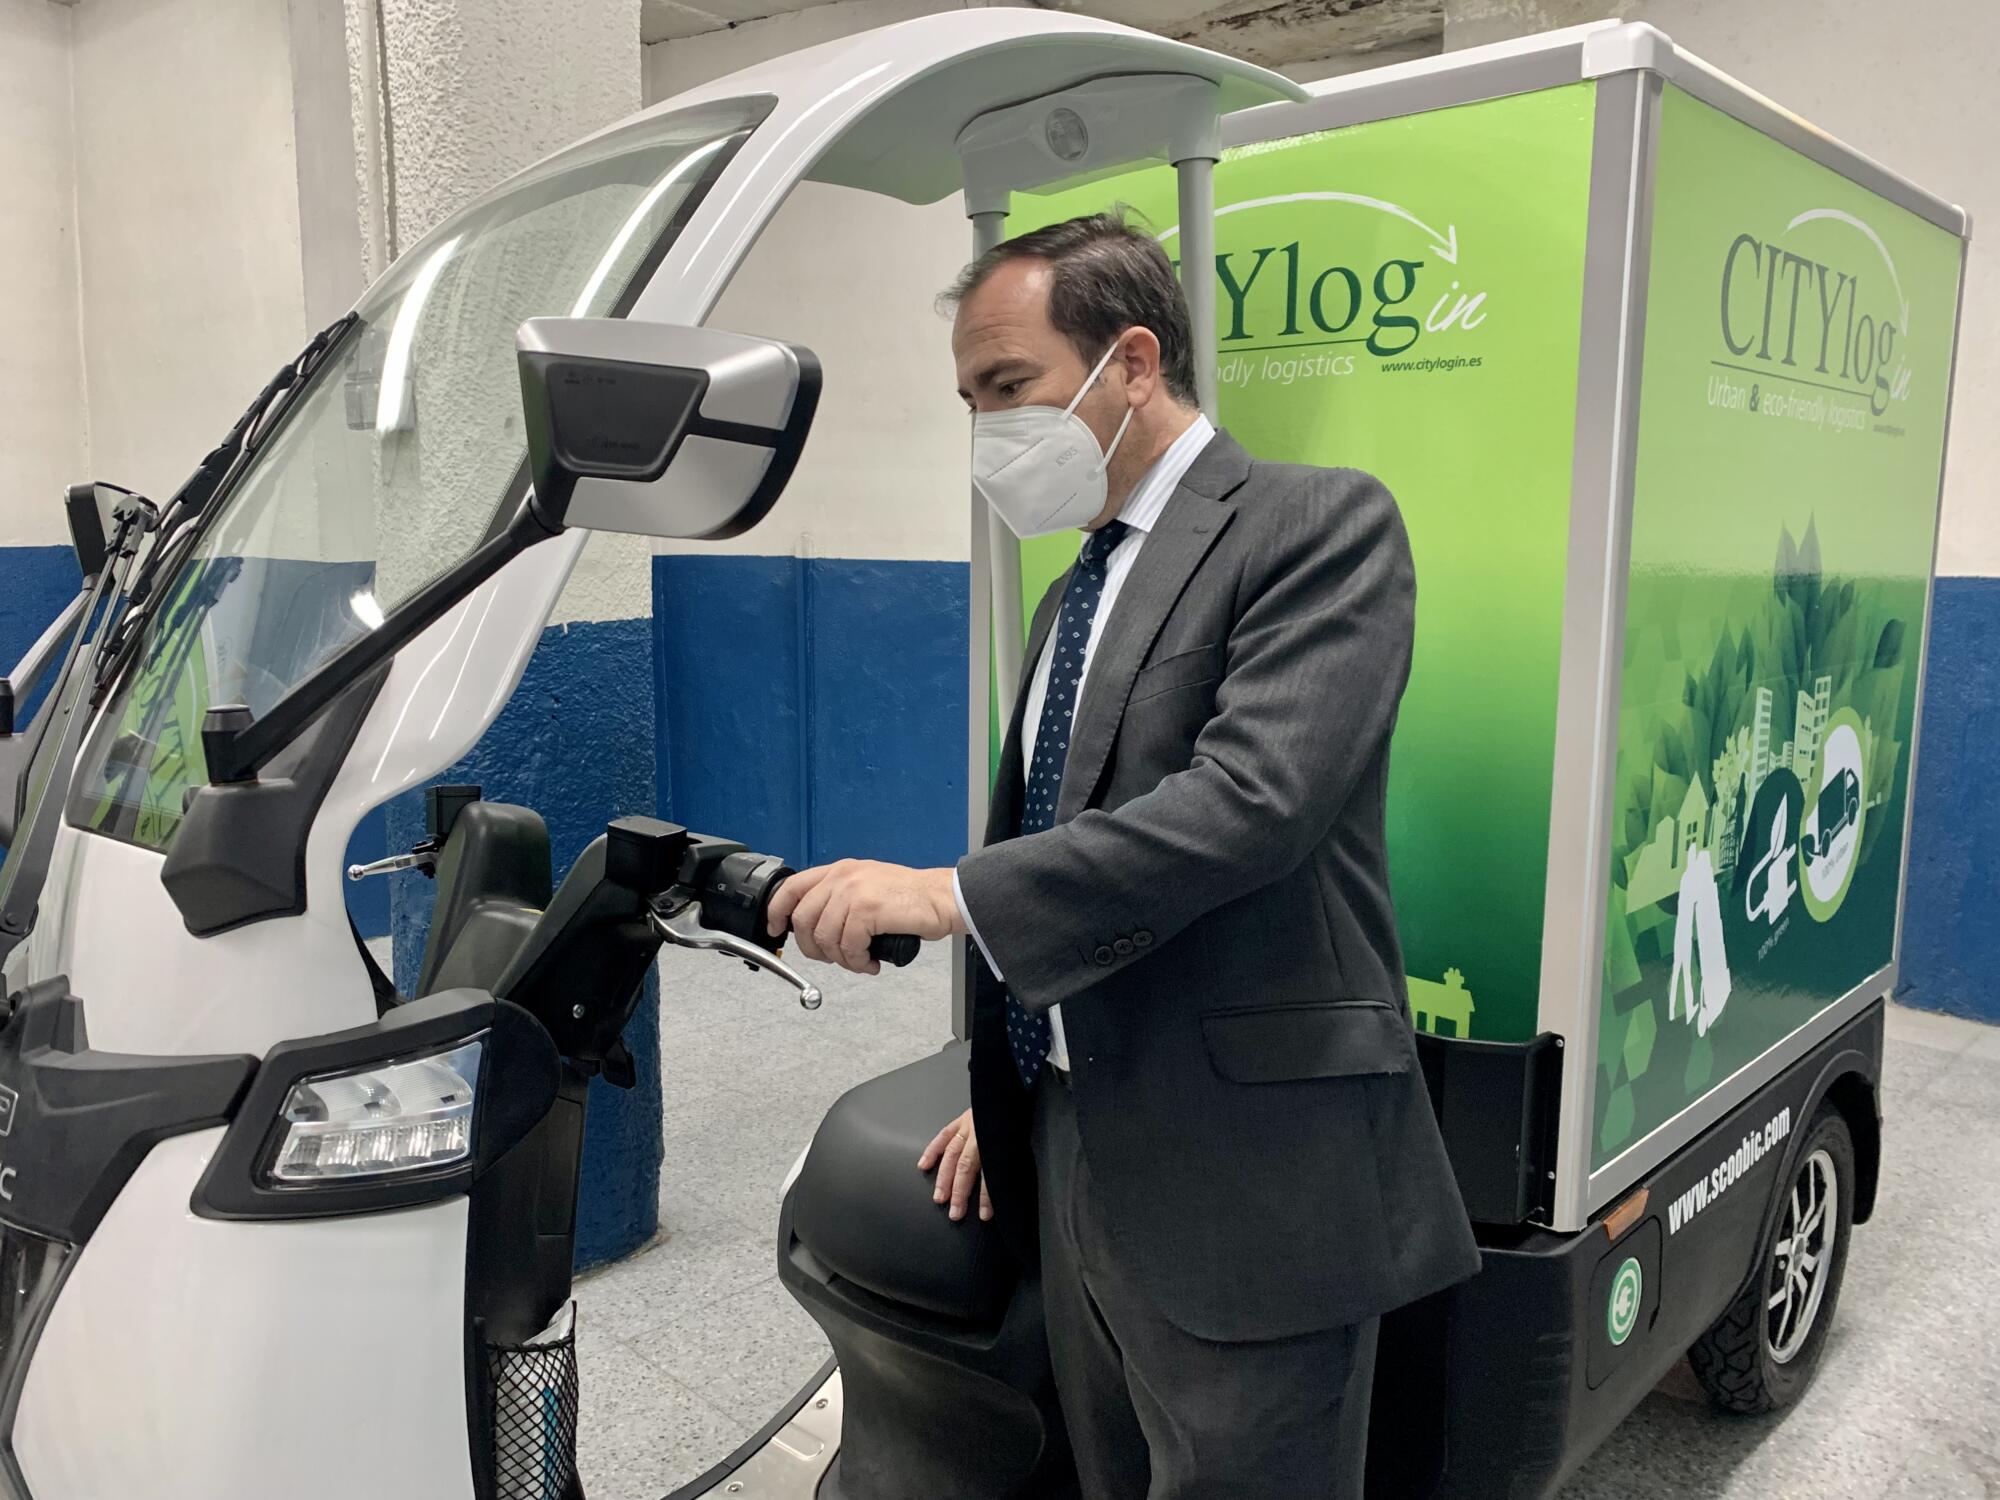 A logistics micro hub in a Madrid parking lot will boost low-emission goods distribution